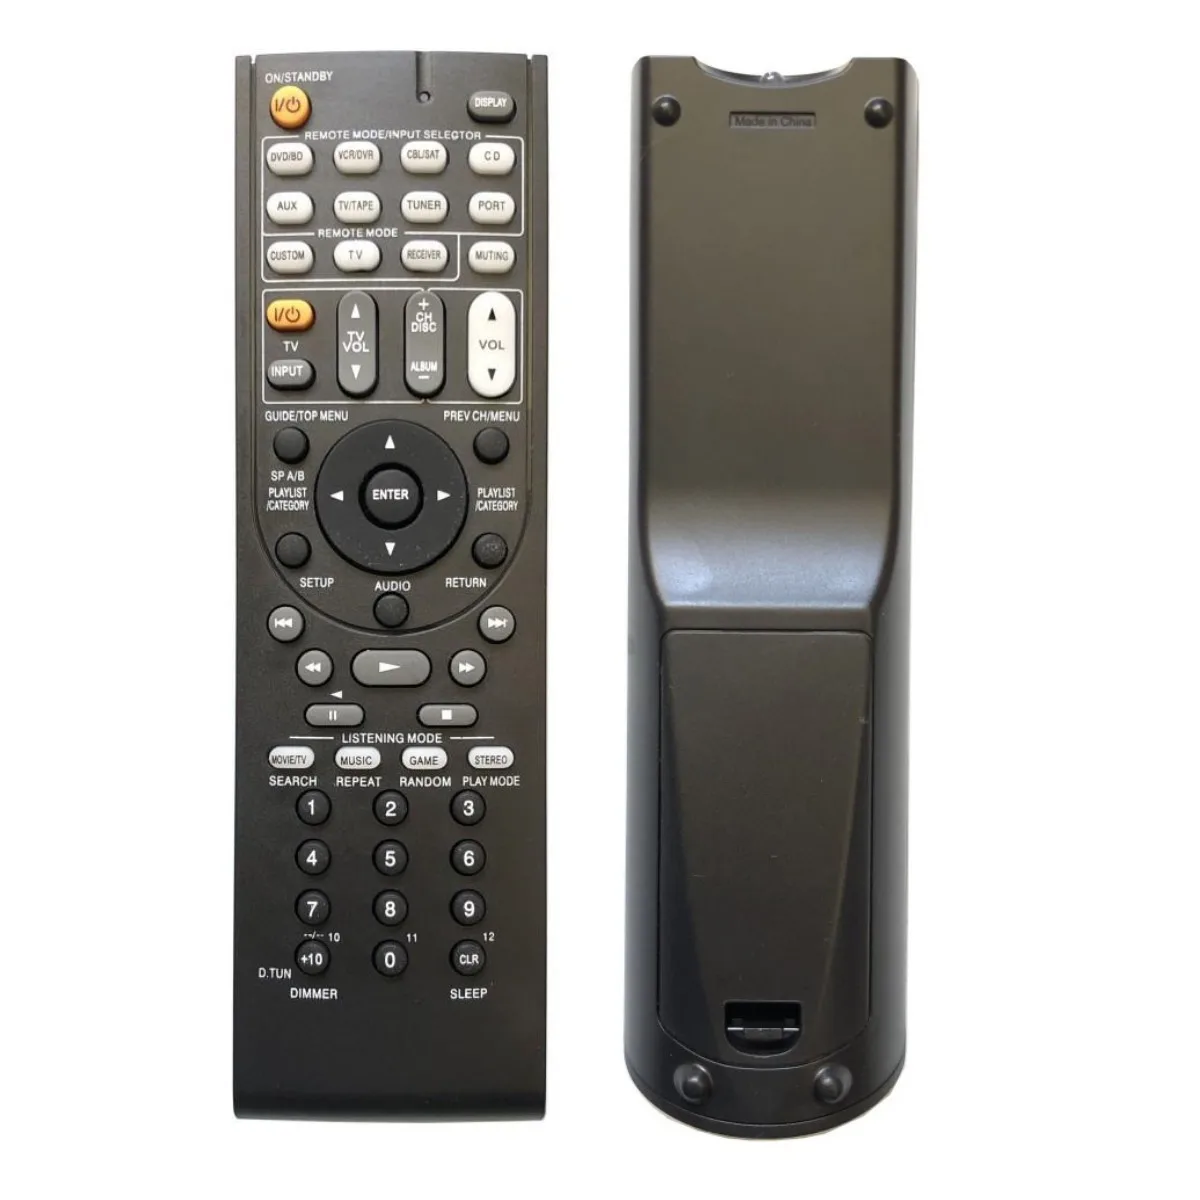 

New remote control fit for Onkyo AV HT-R570 HT-S5200 HTS5200B HTP-570 SKF-570L SKF-570R SKC-570 SKR-570L SKR-570R SKB-570L